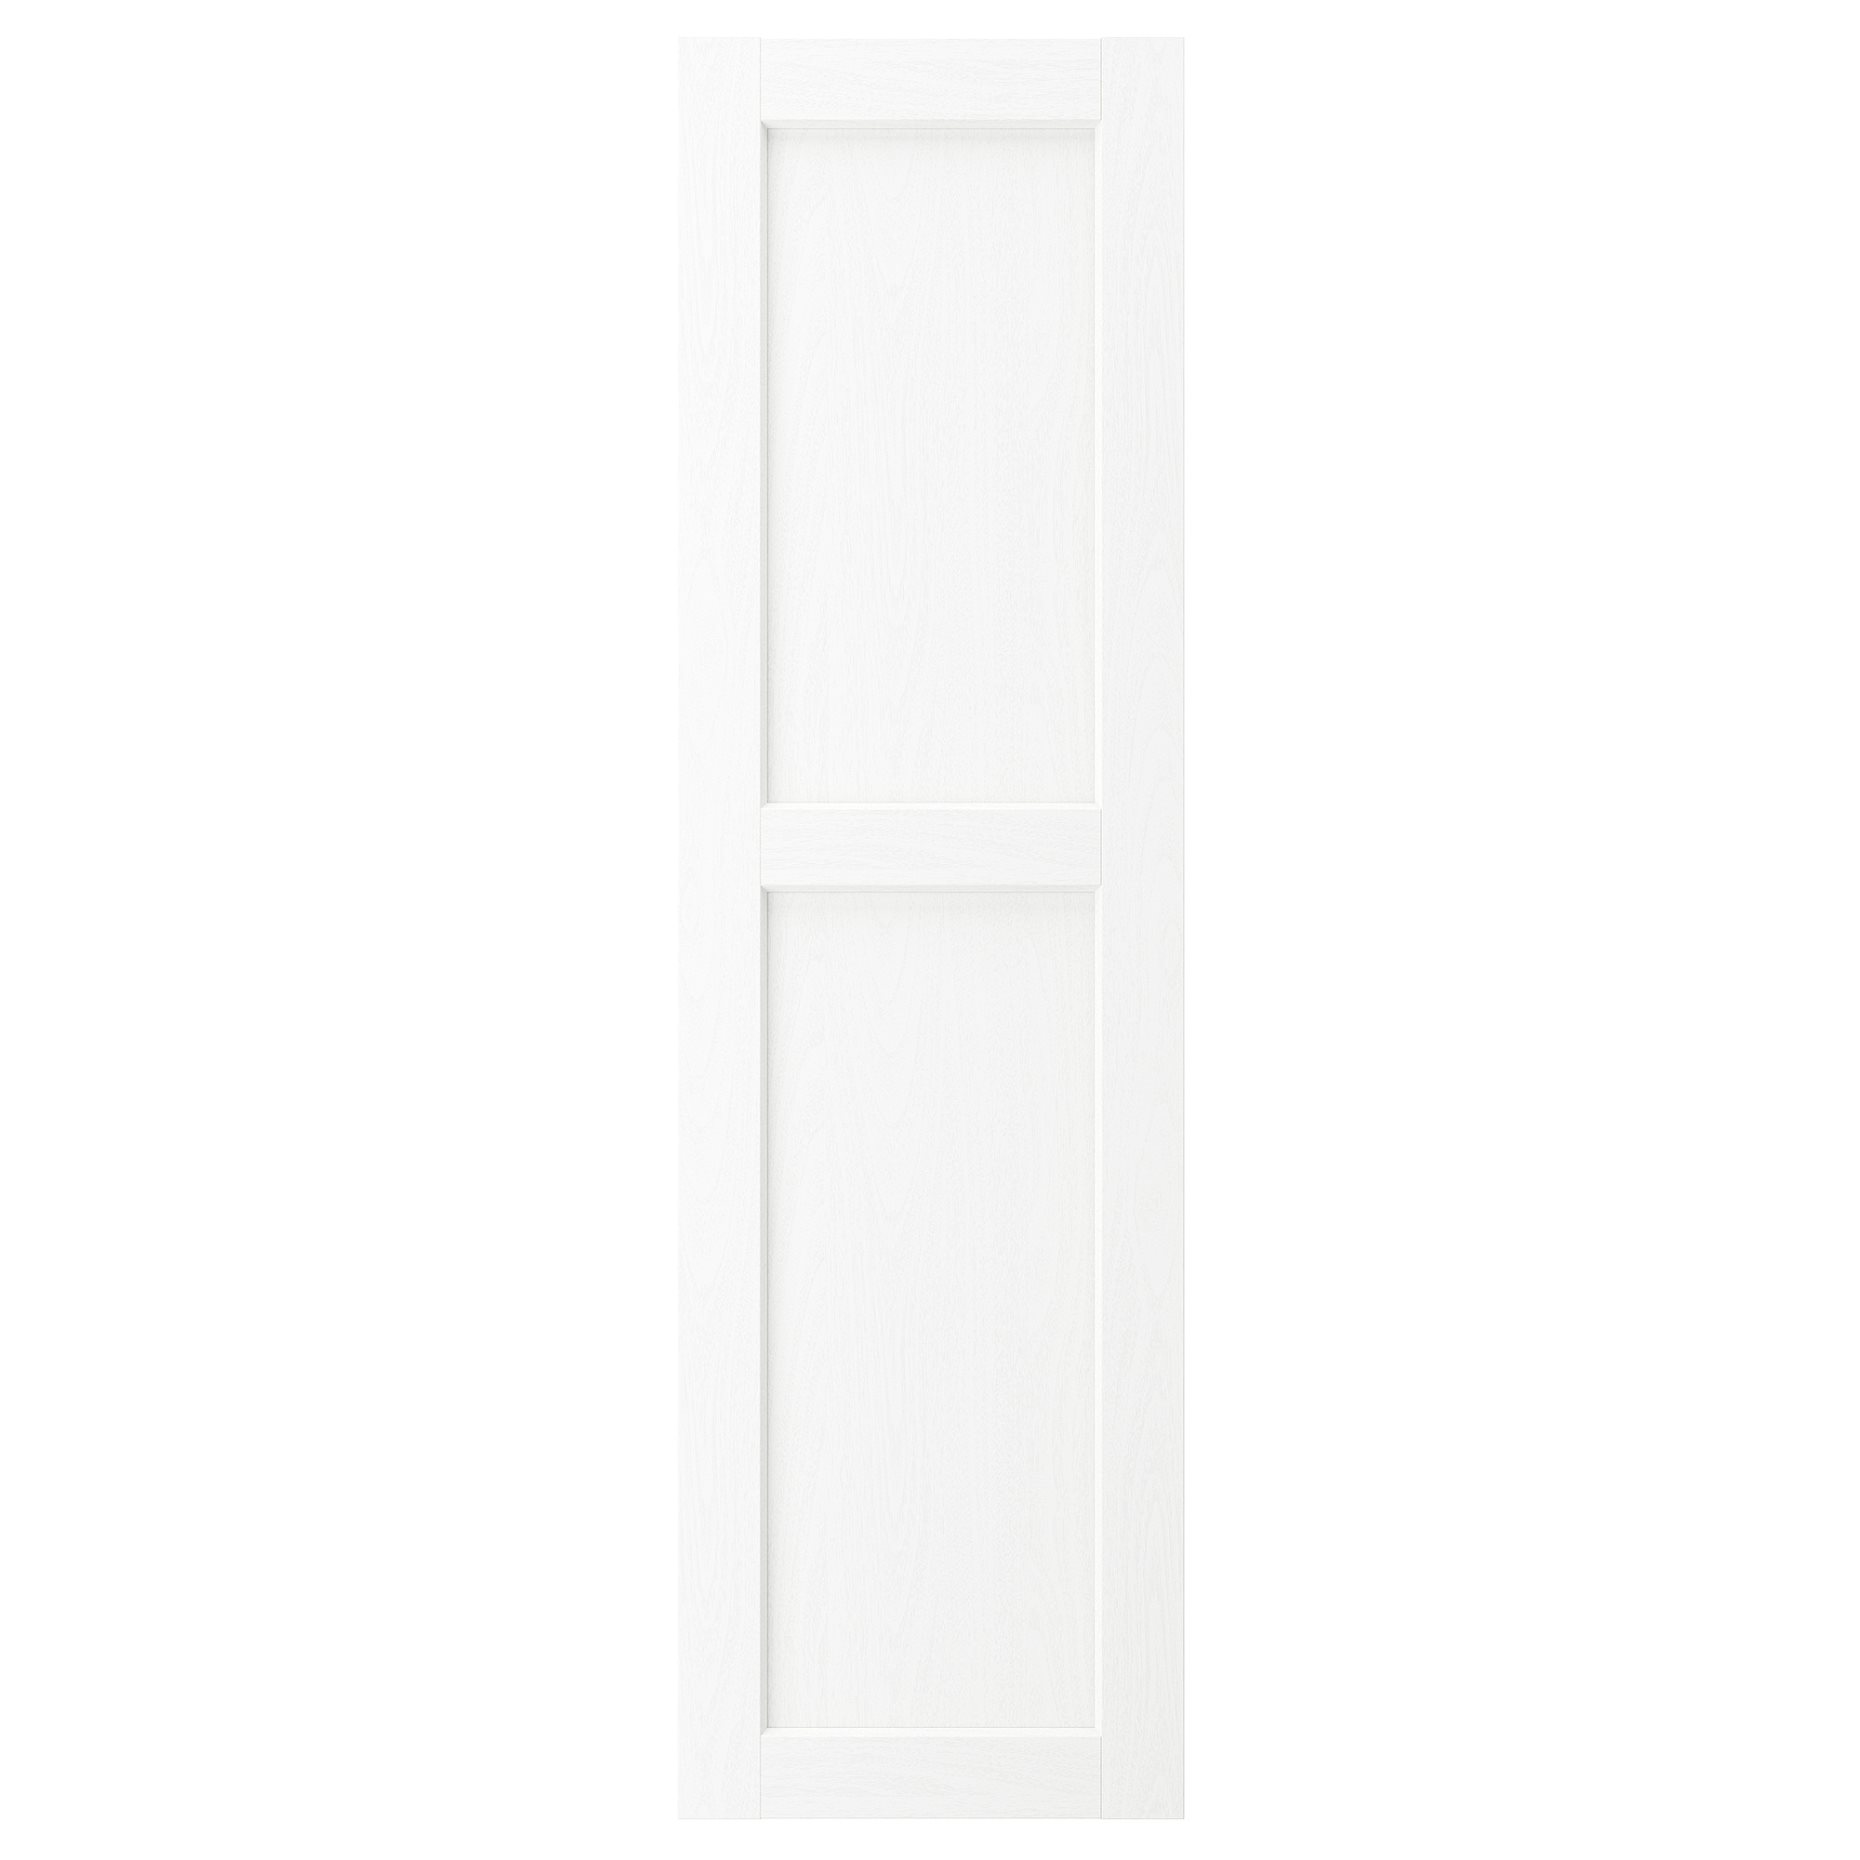 ENKÖPING, πόρτα, 40x140 cm, 505.057.62